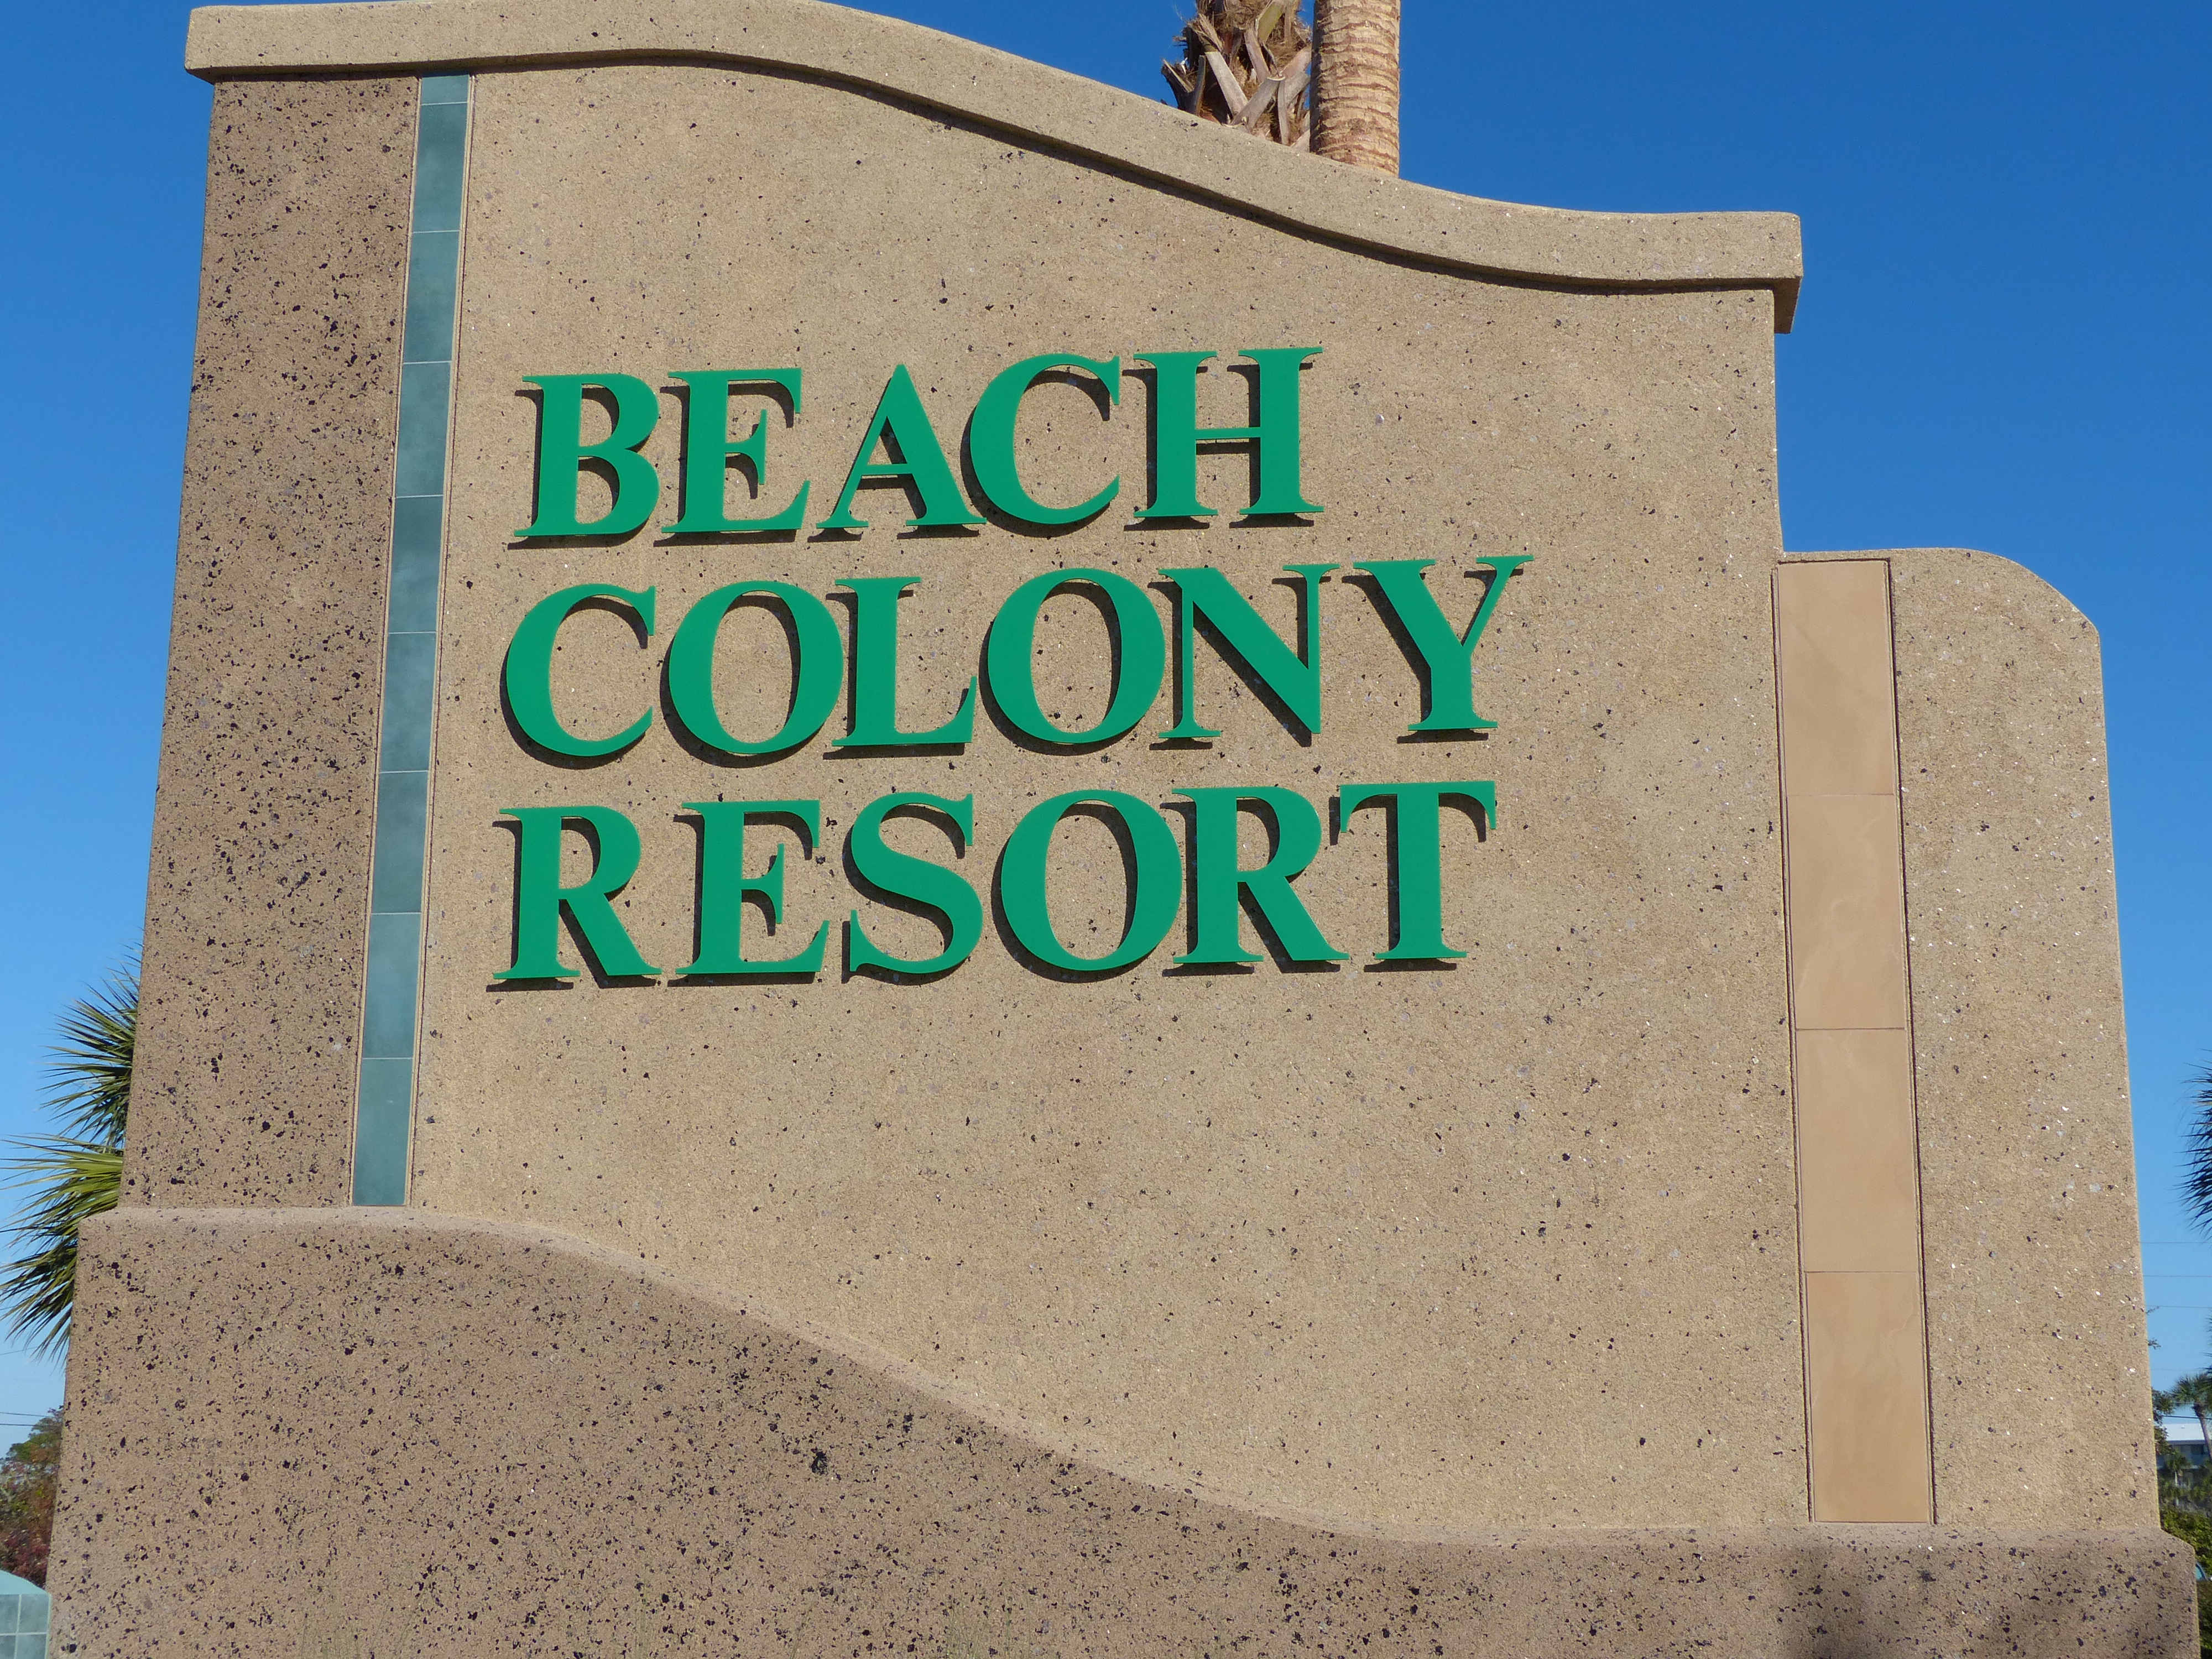 Beach colony resort